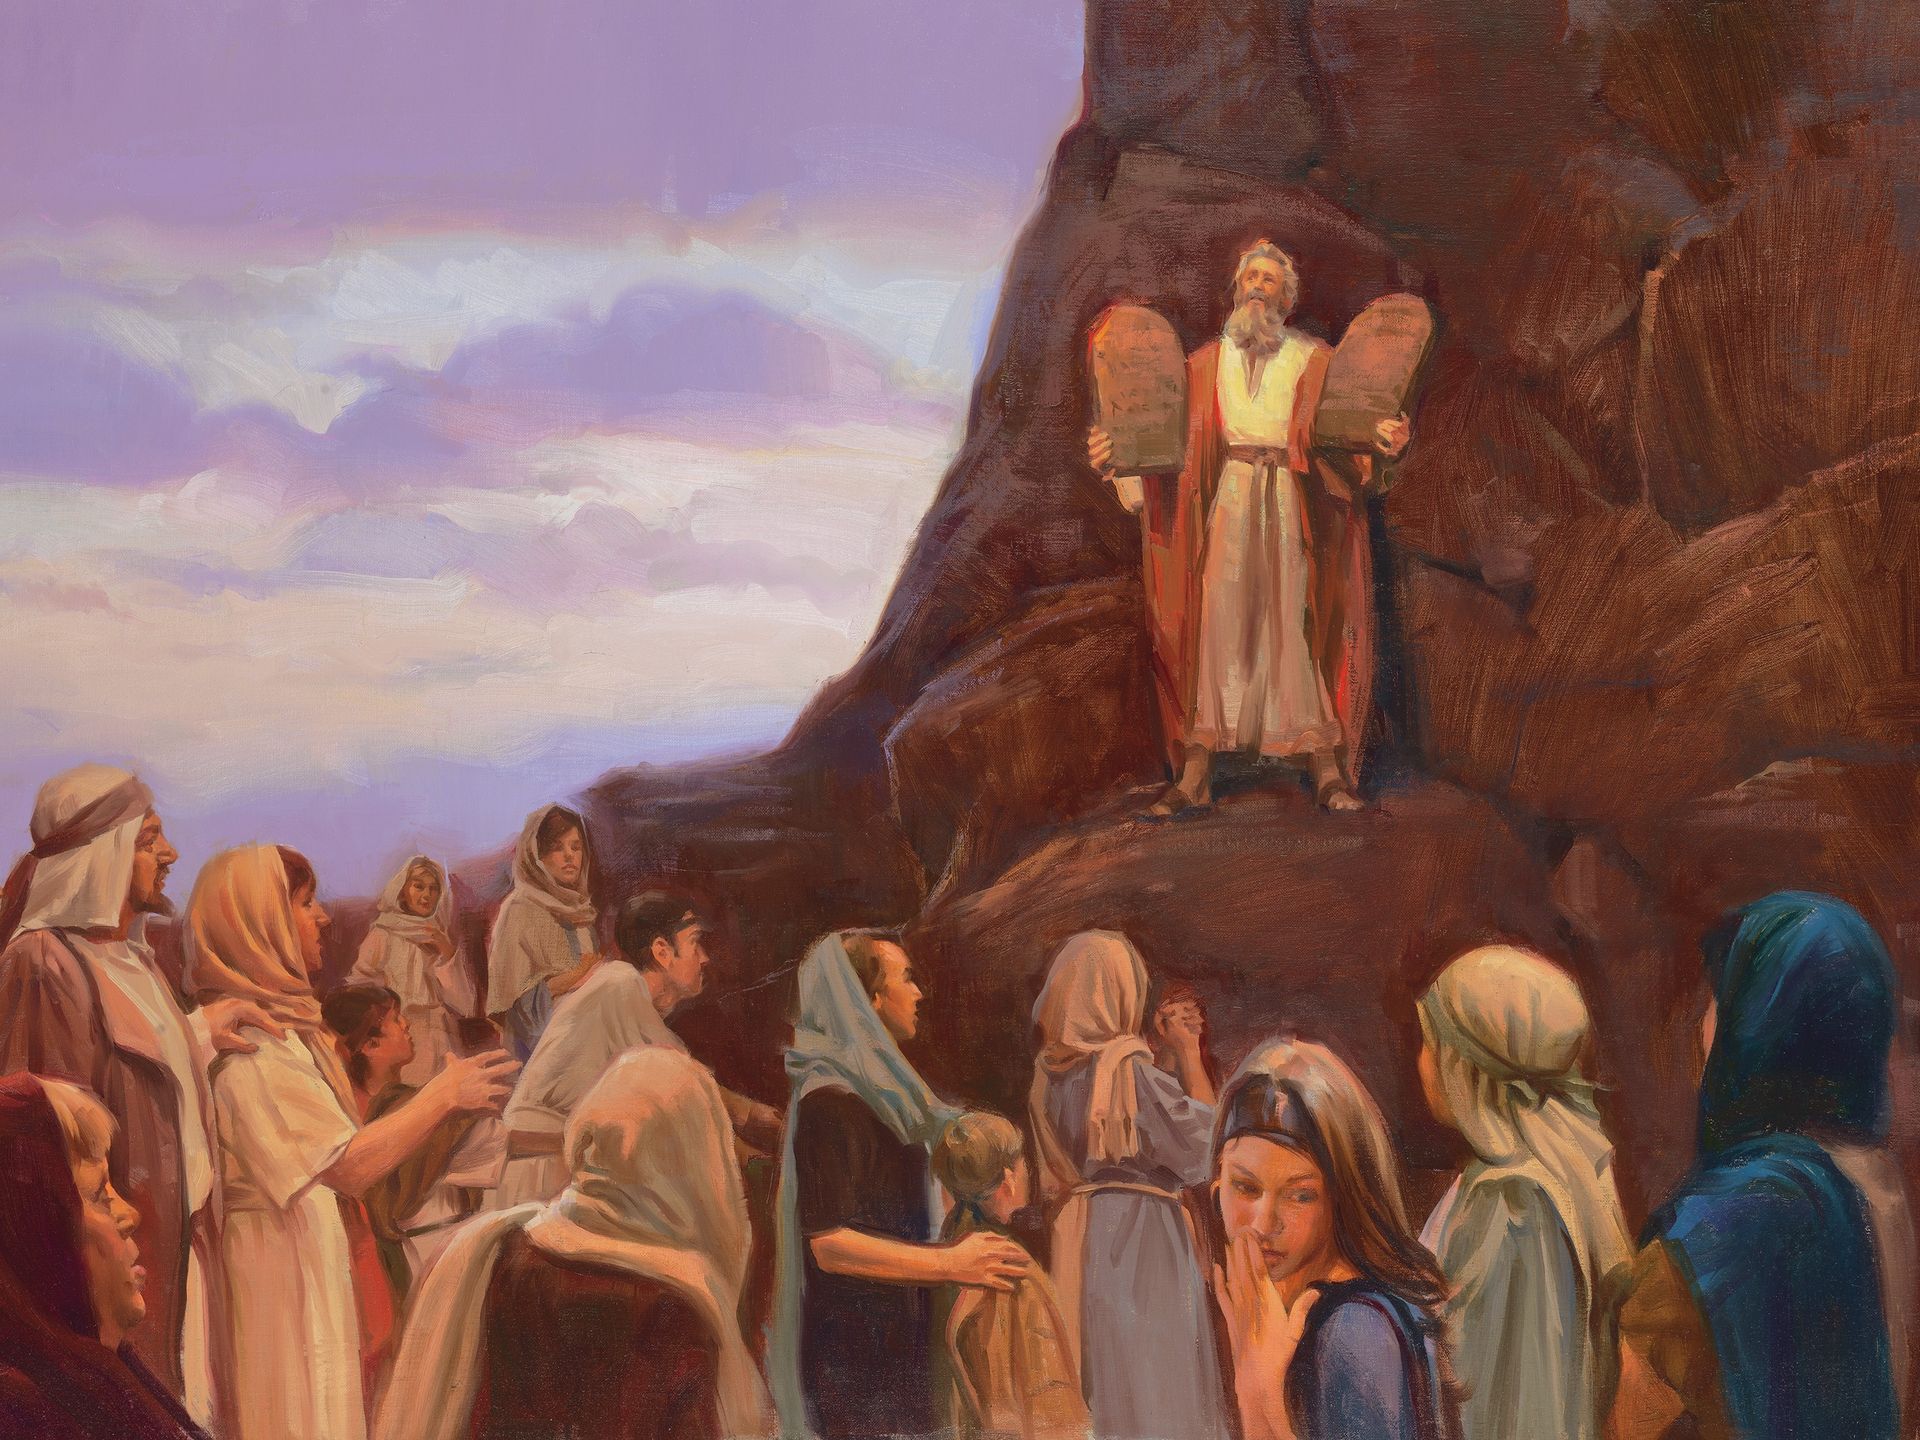 Moses holding the Ten Commandments.